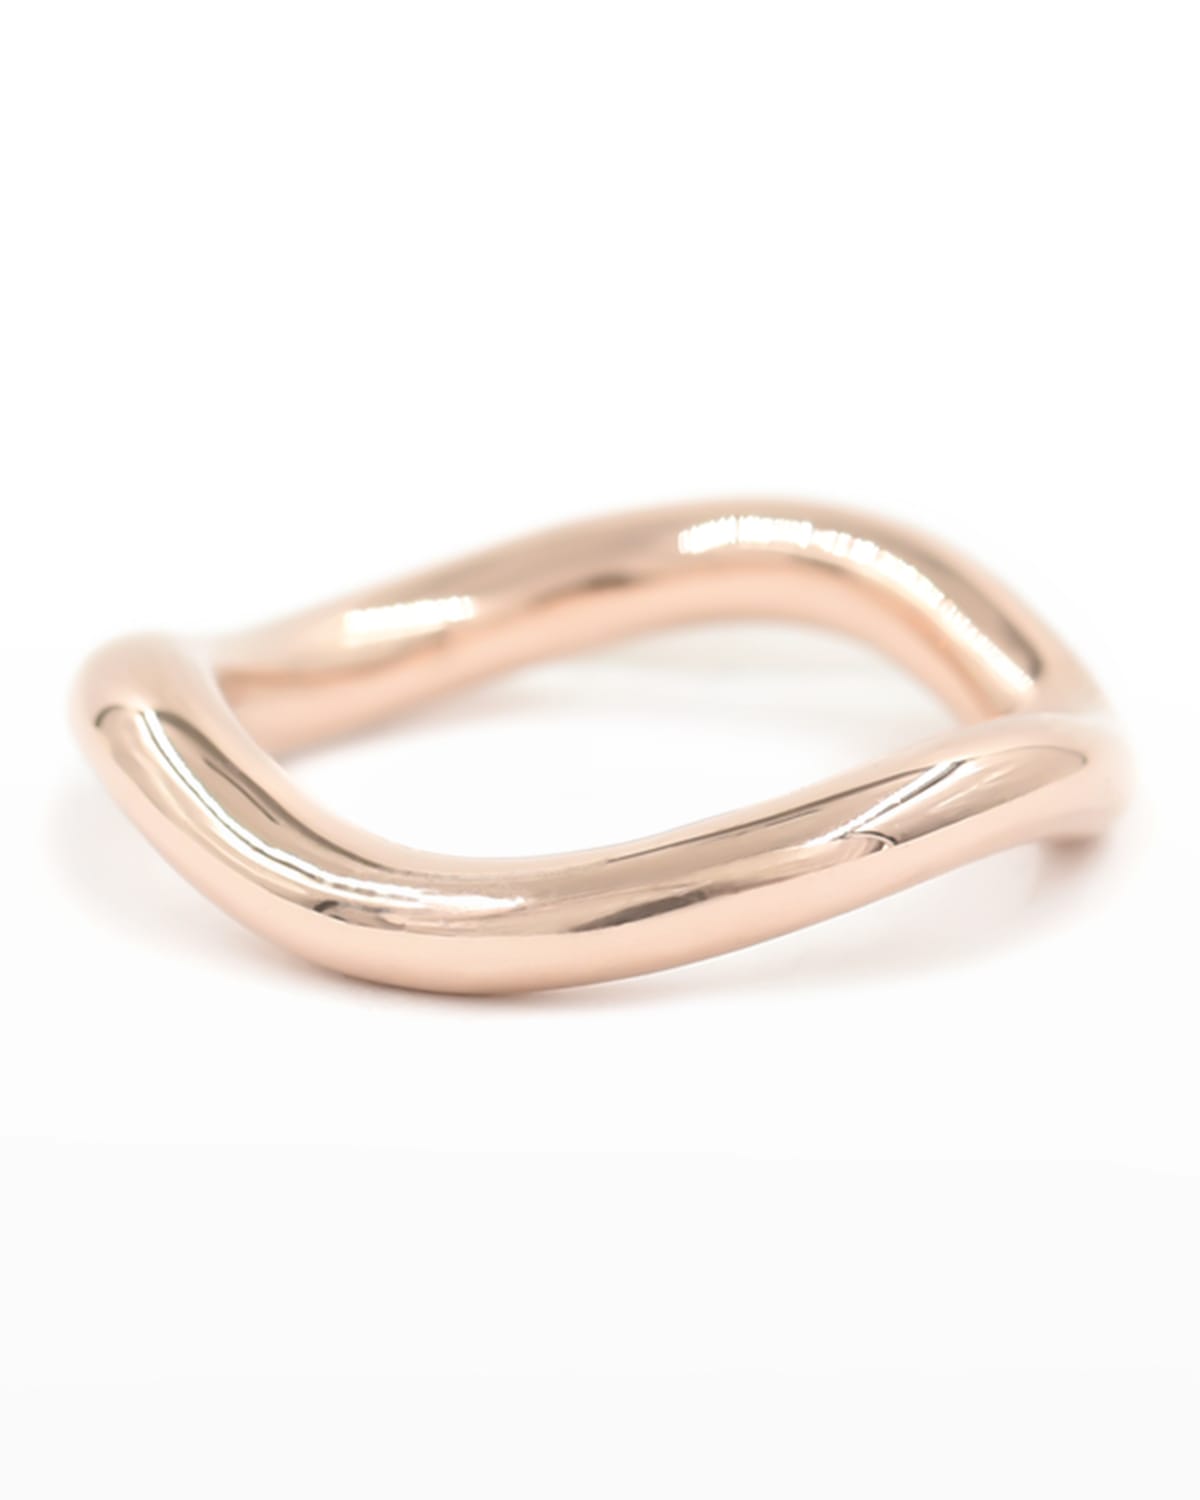 Bondeye Jewelry Popie Wave Ring In Solid 14k Gold In Rose Gold